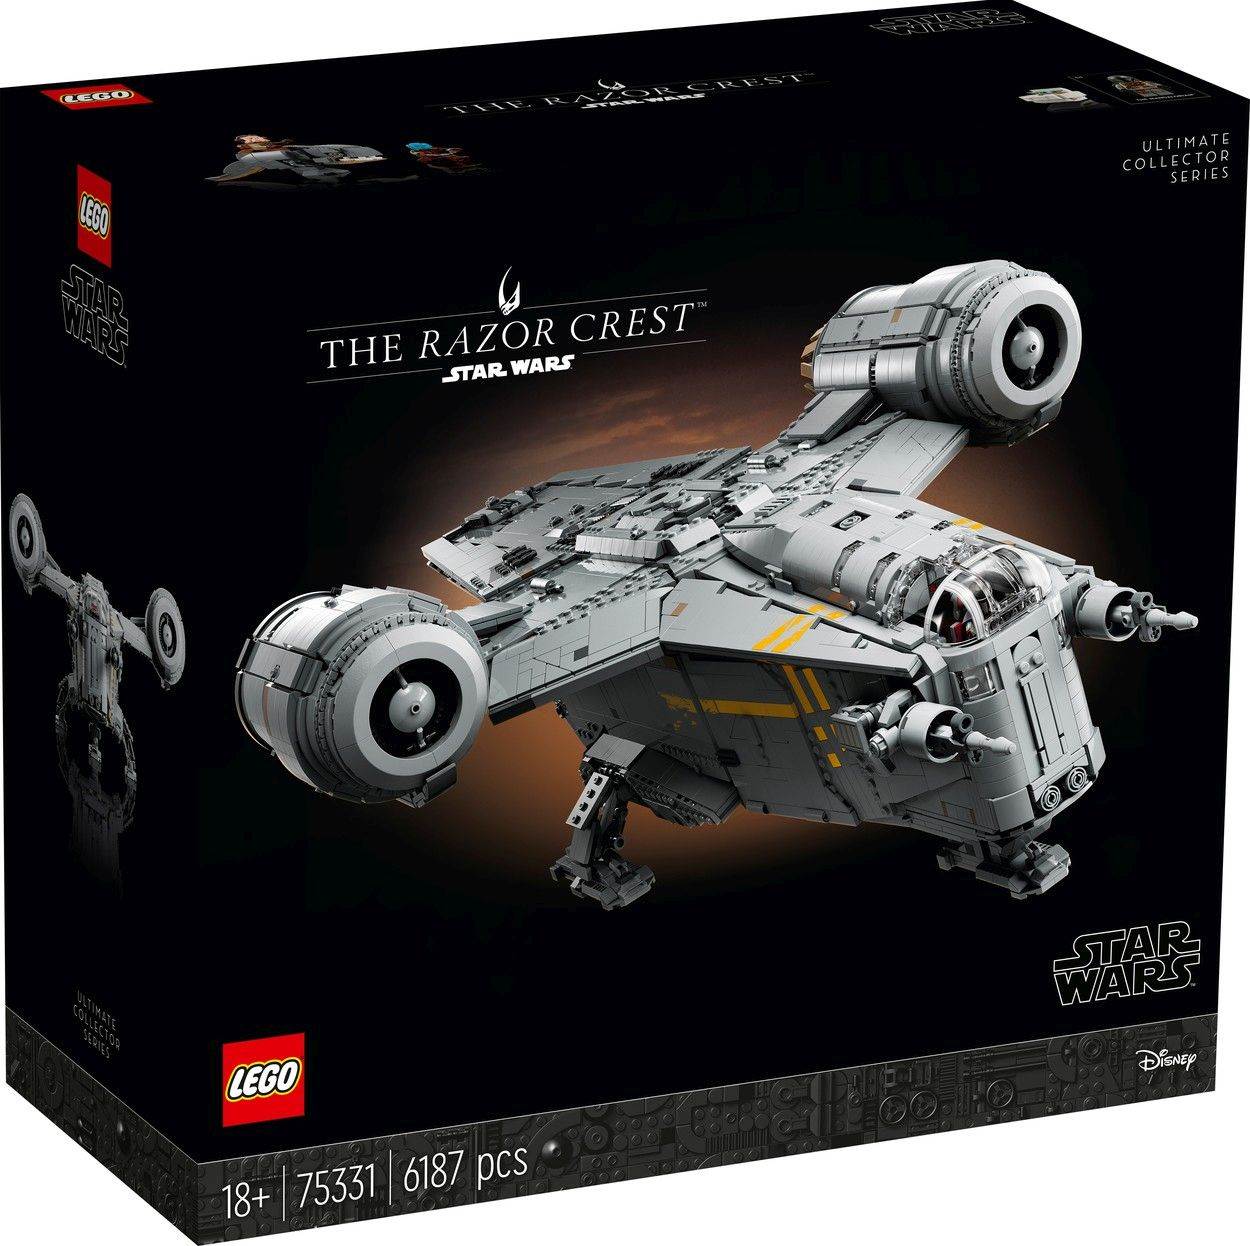  Star Wars The Razor Crest Lego (5).jpg 